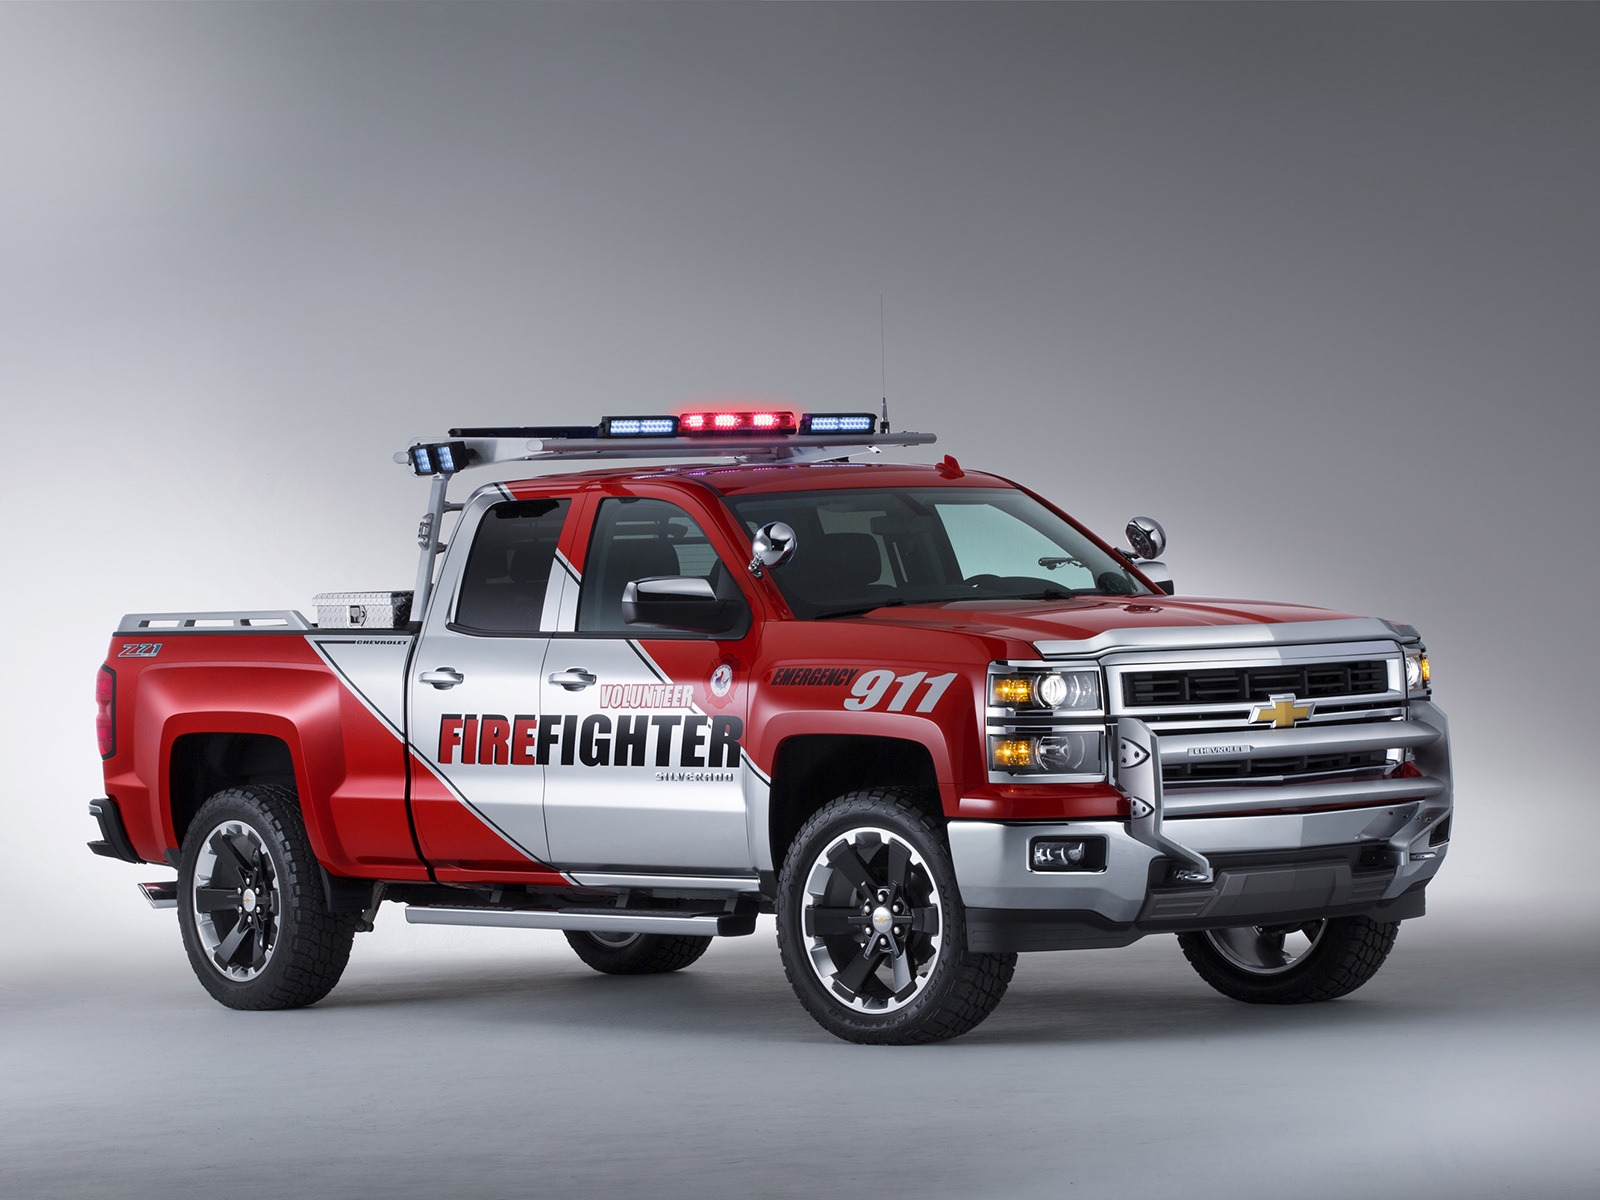 Chevrolet Silverado Volunteer Firefighters Concept for 1600 x 1200 resolution